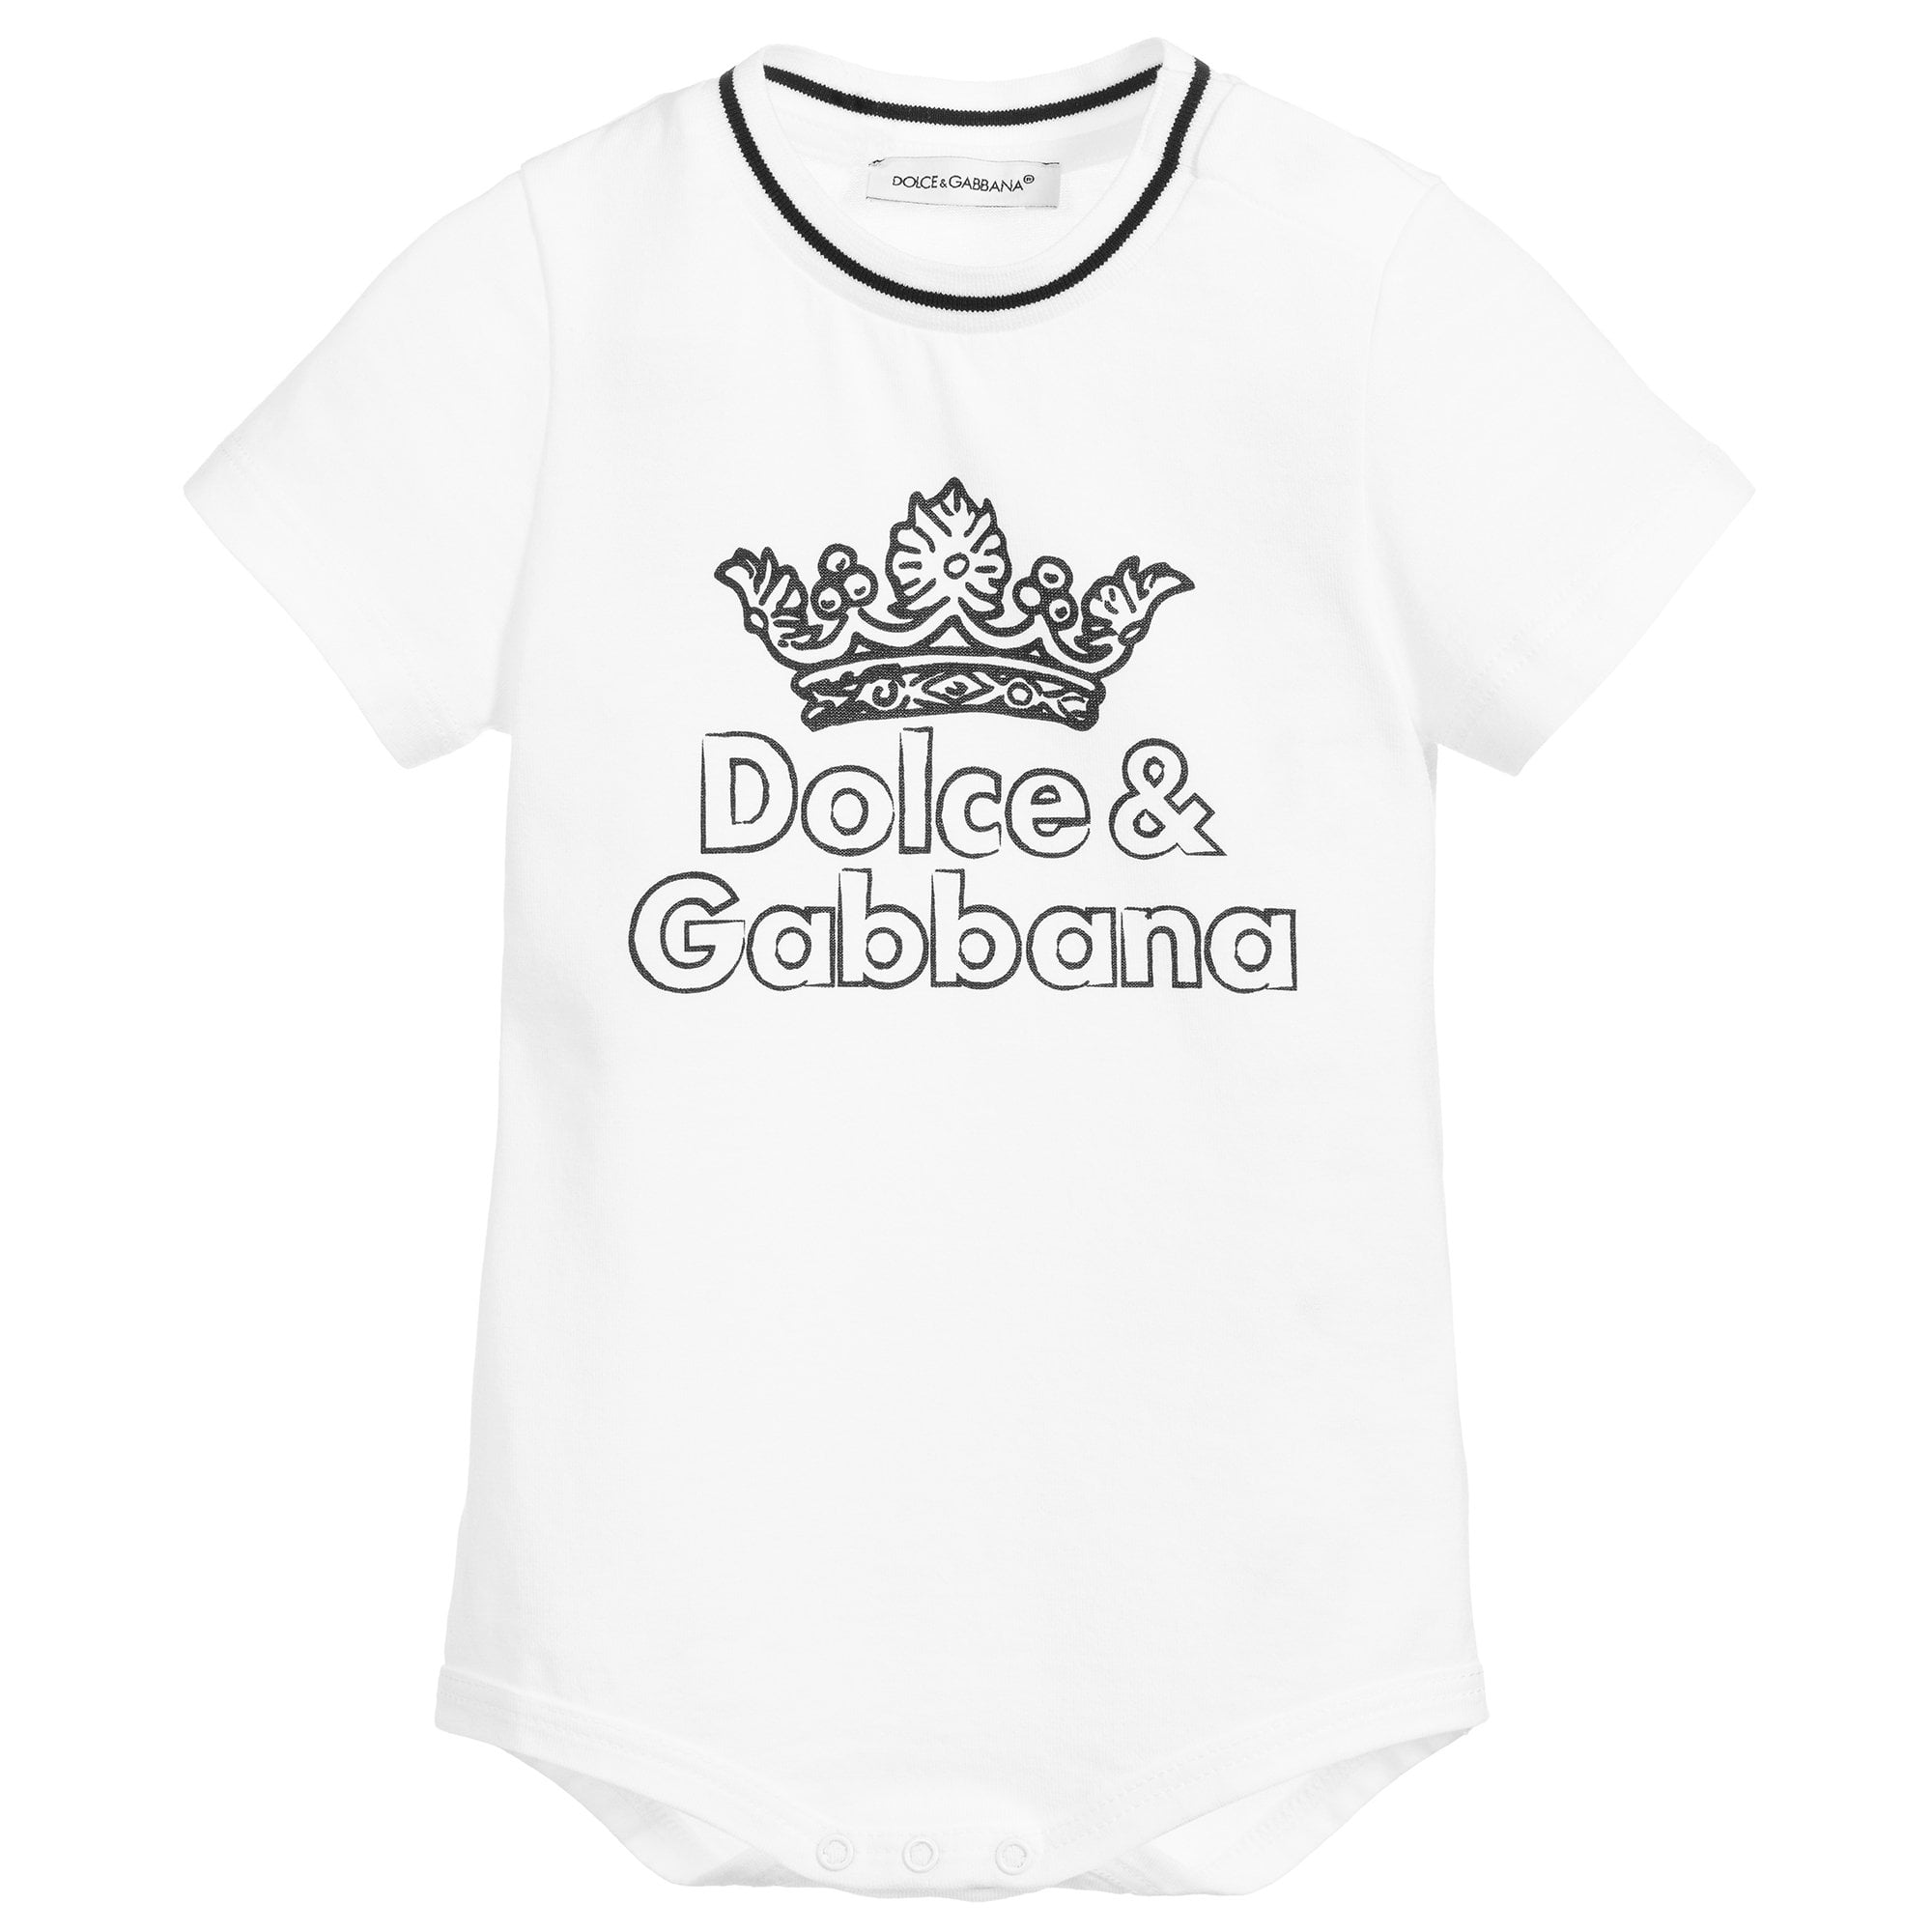 Dolce &amp; Gabbana Baby Boys Body Suit White